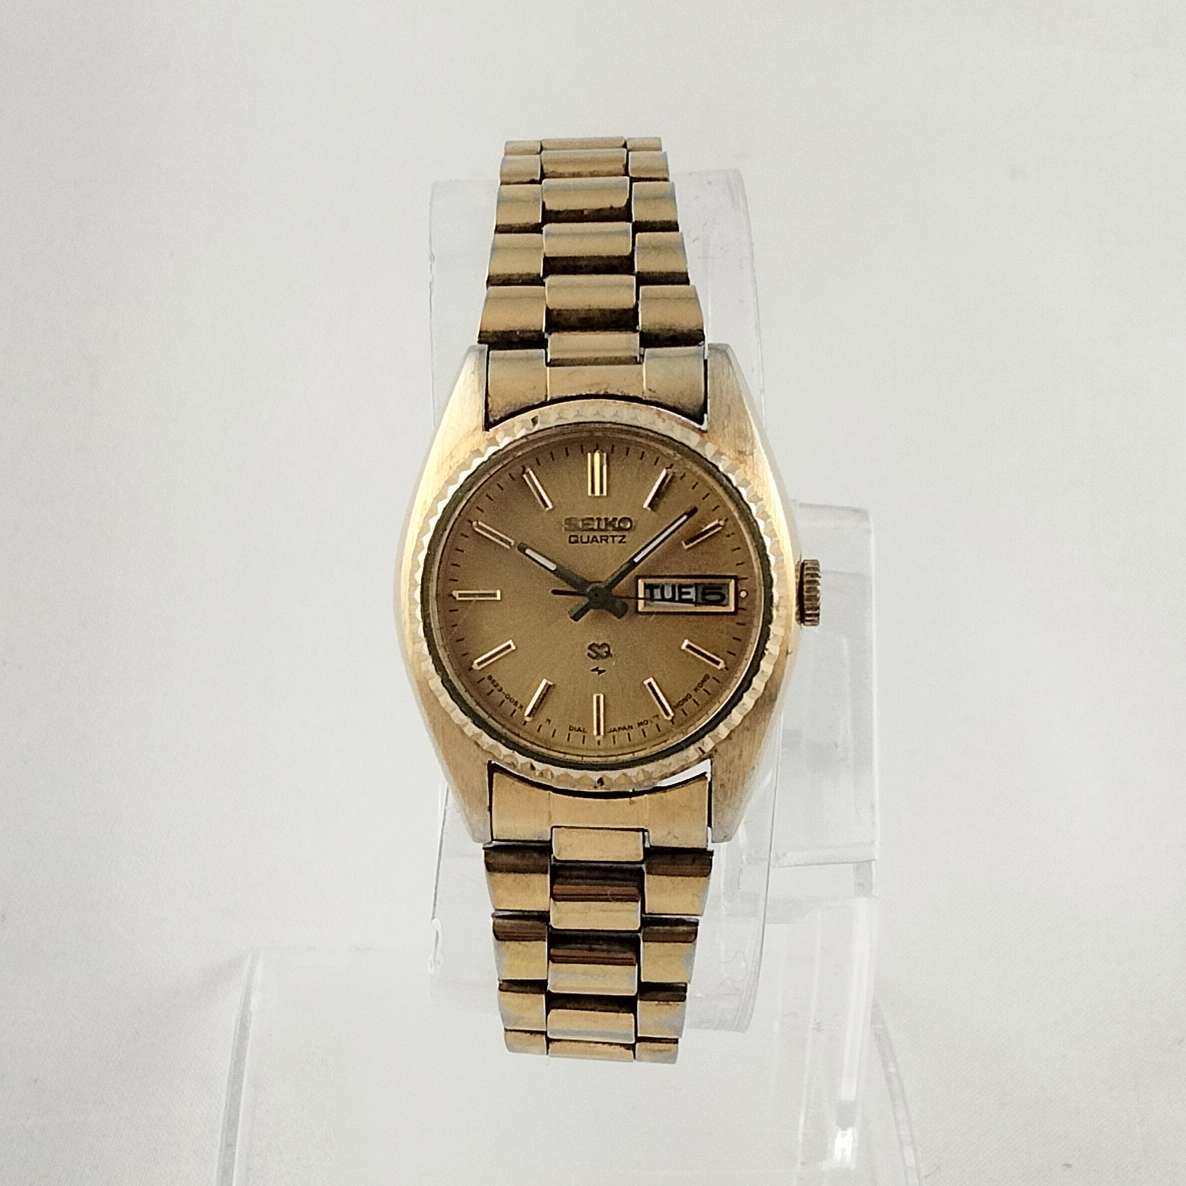 Seiko Unisex Gold Tone Watch, Date Window, Bracelet Strap